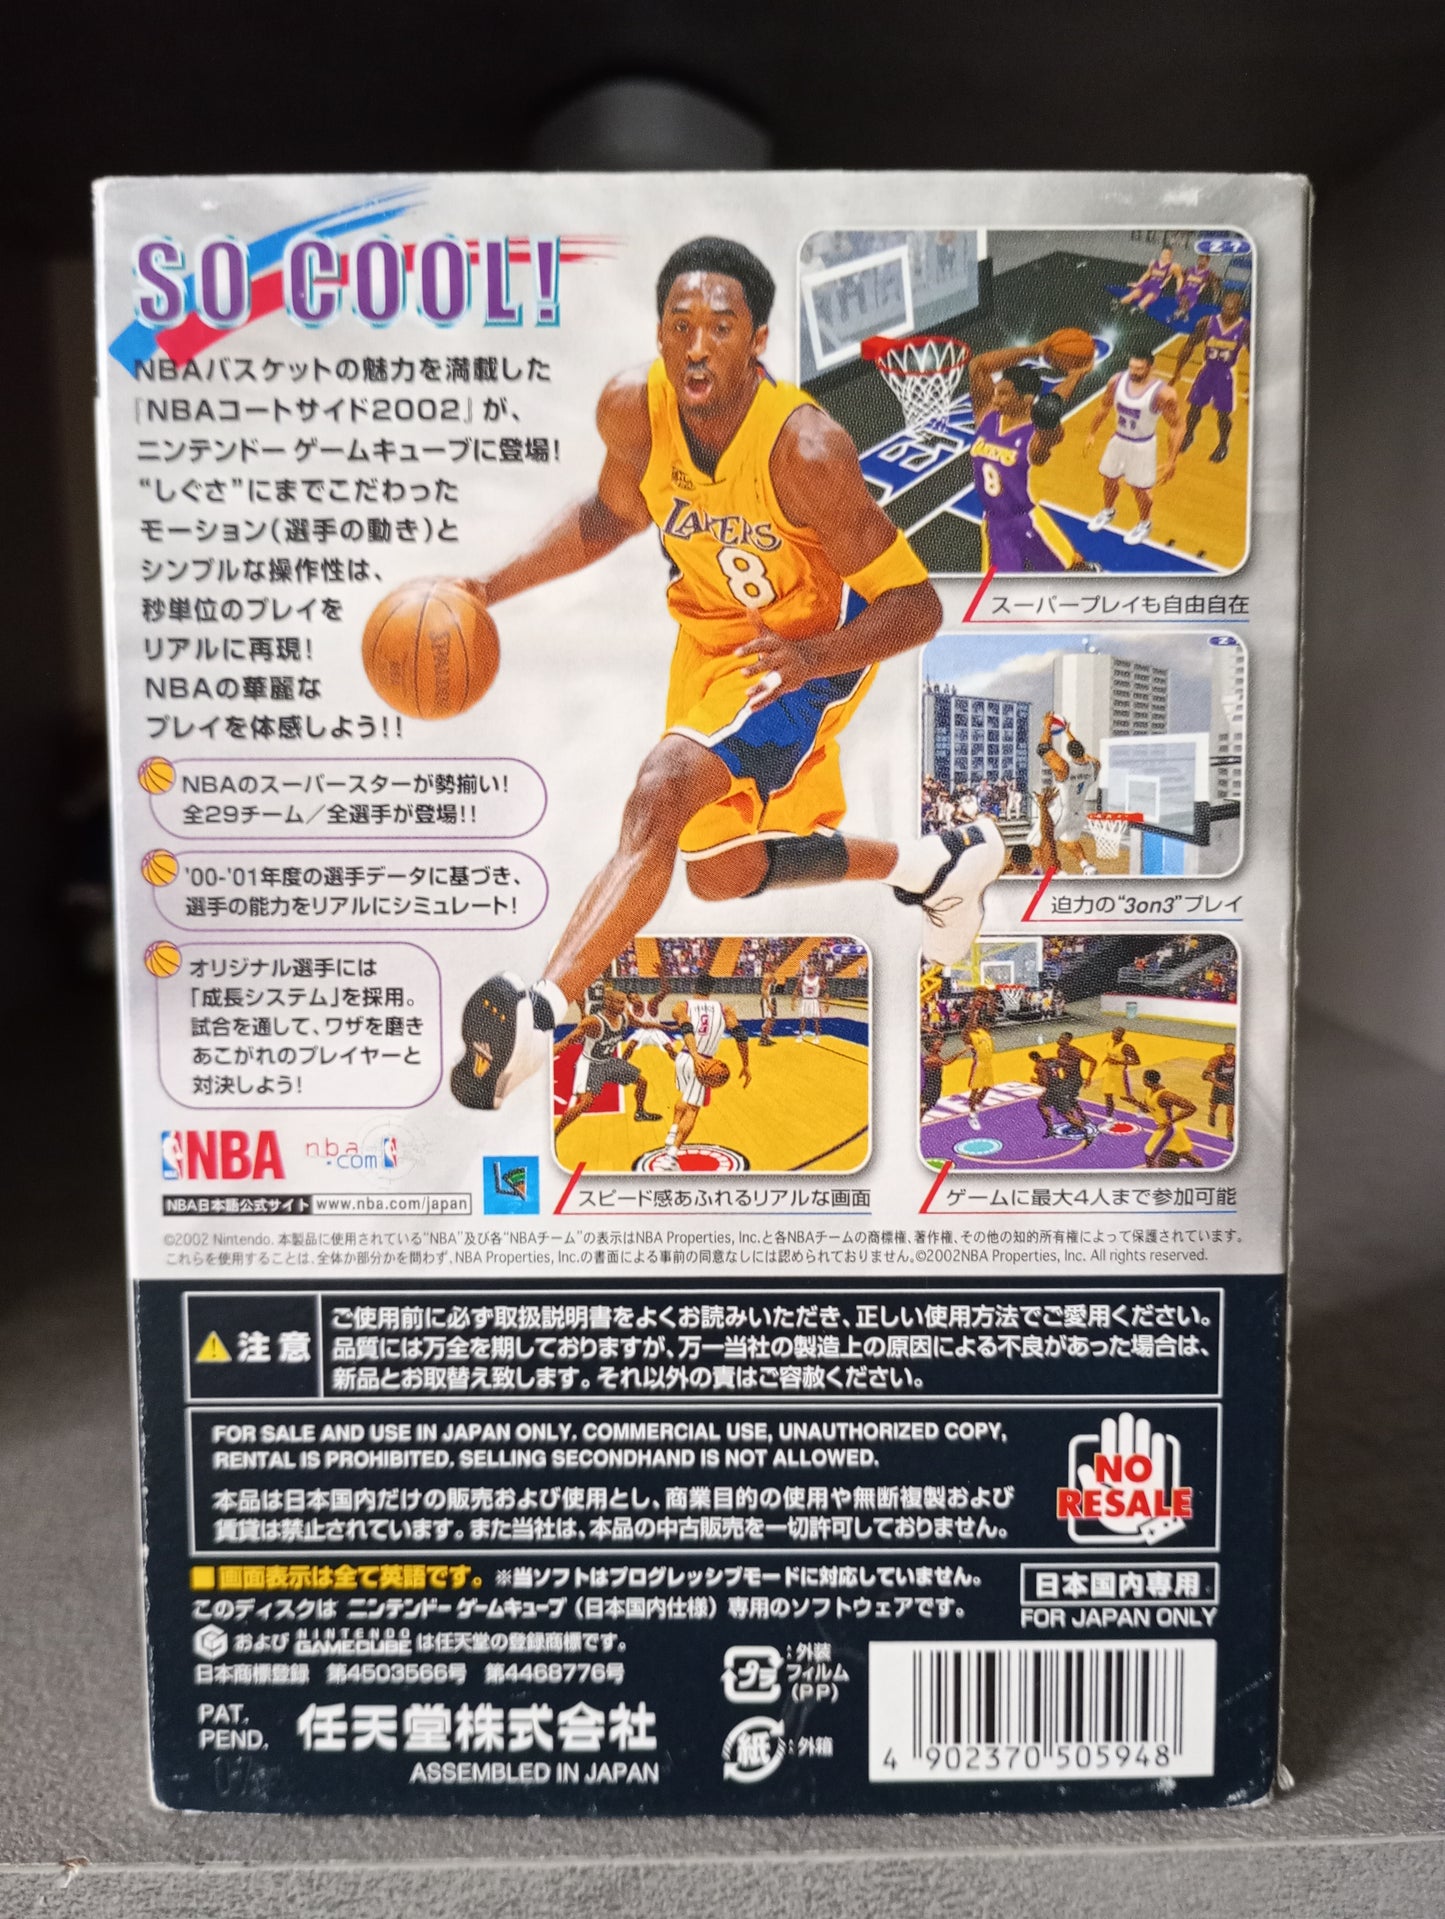 NBA Courtside 2002 (J)